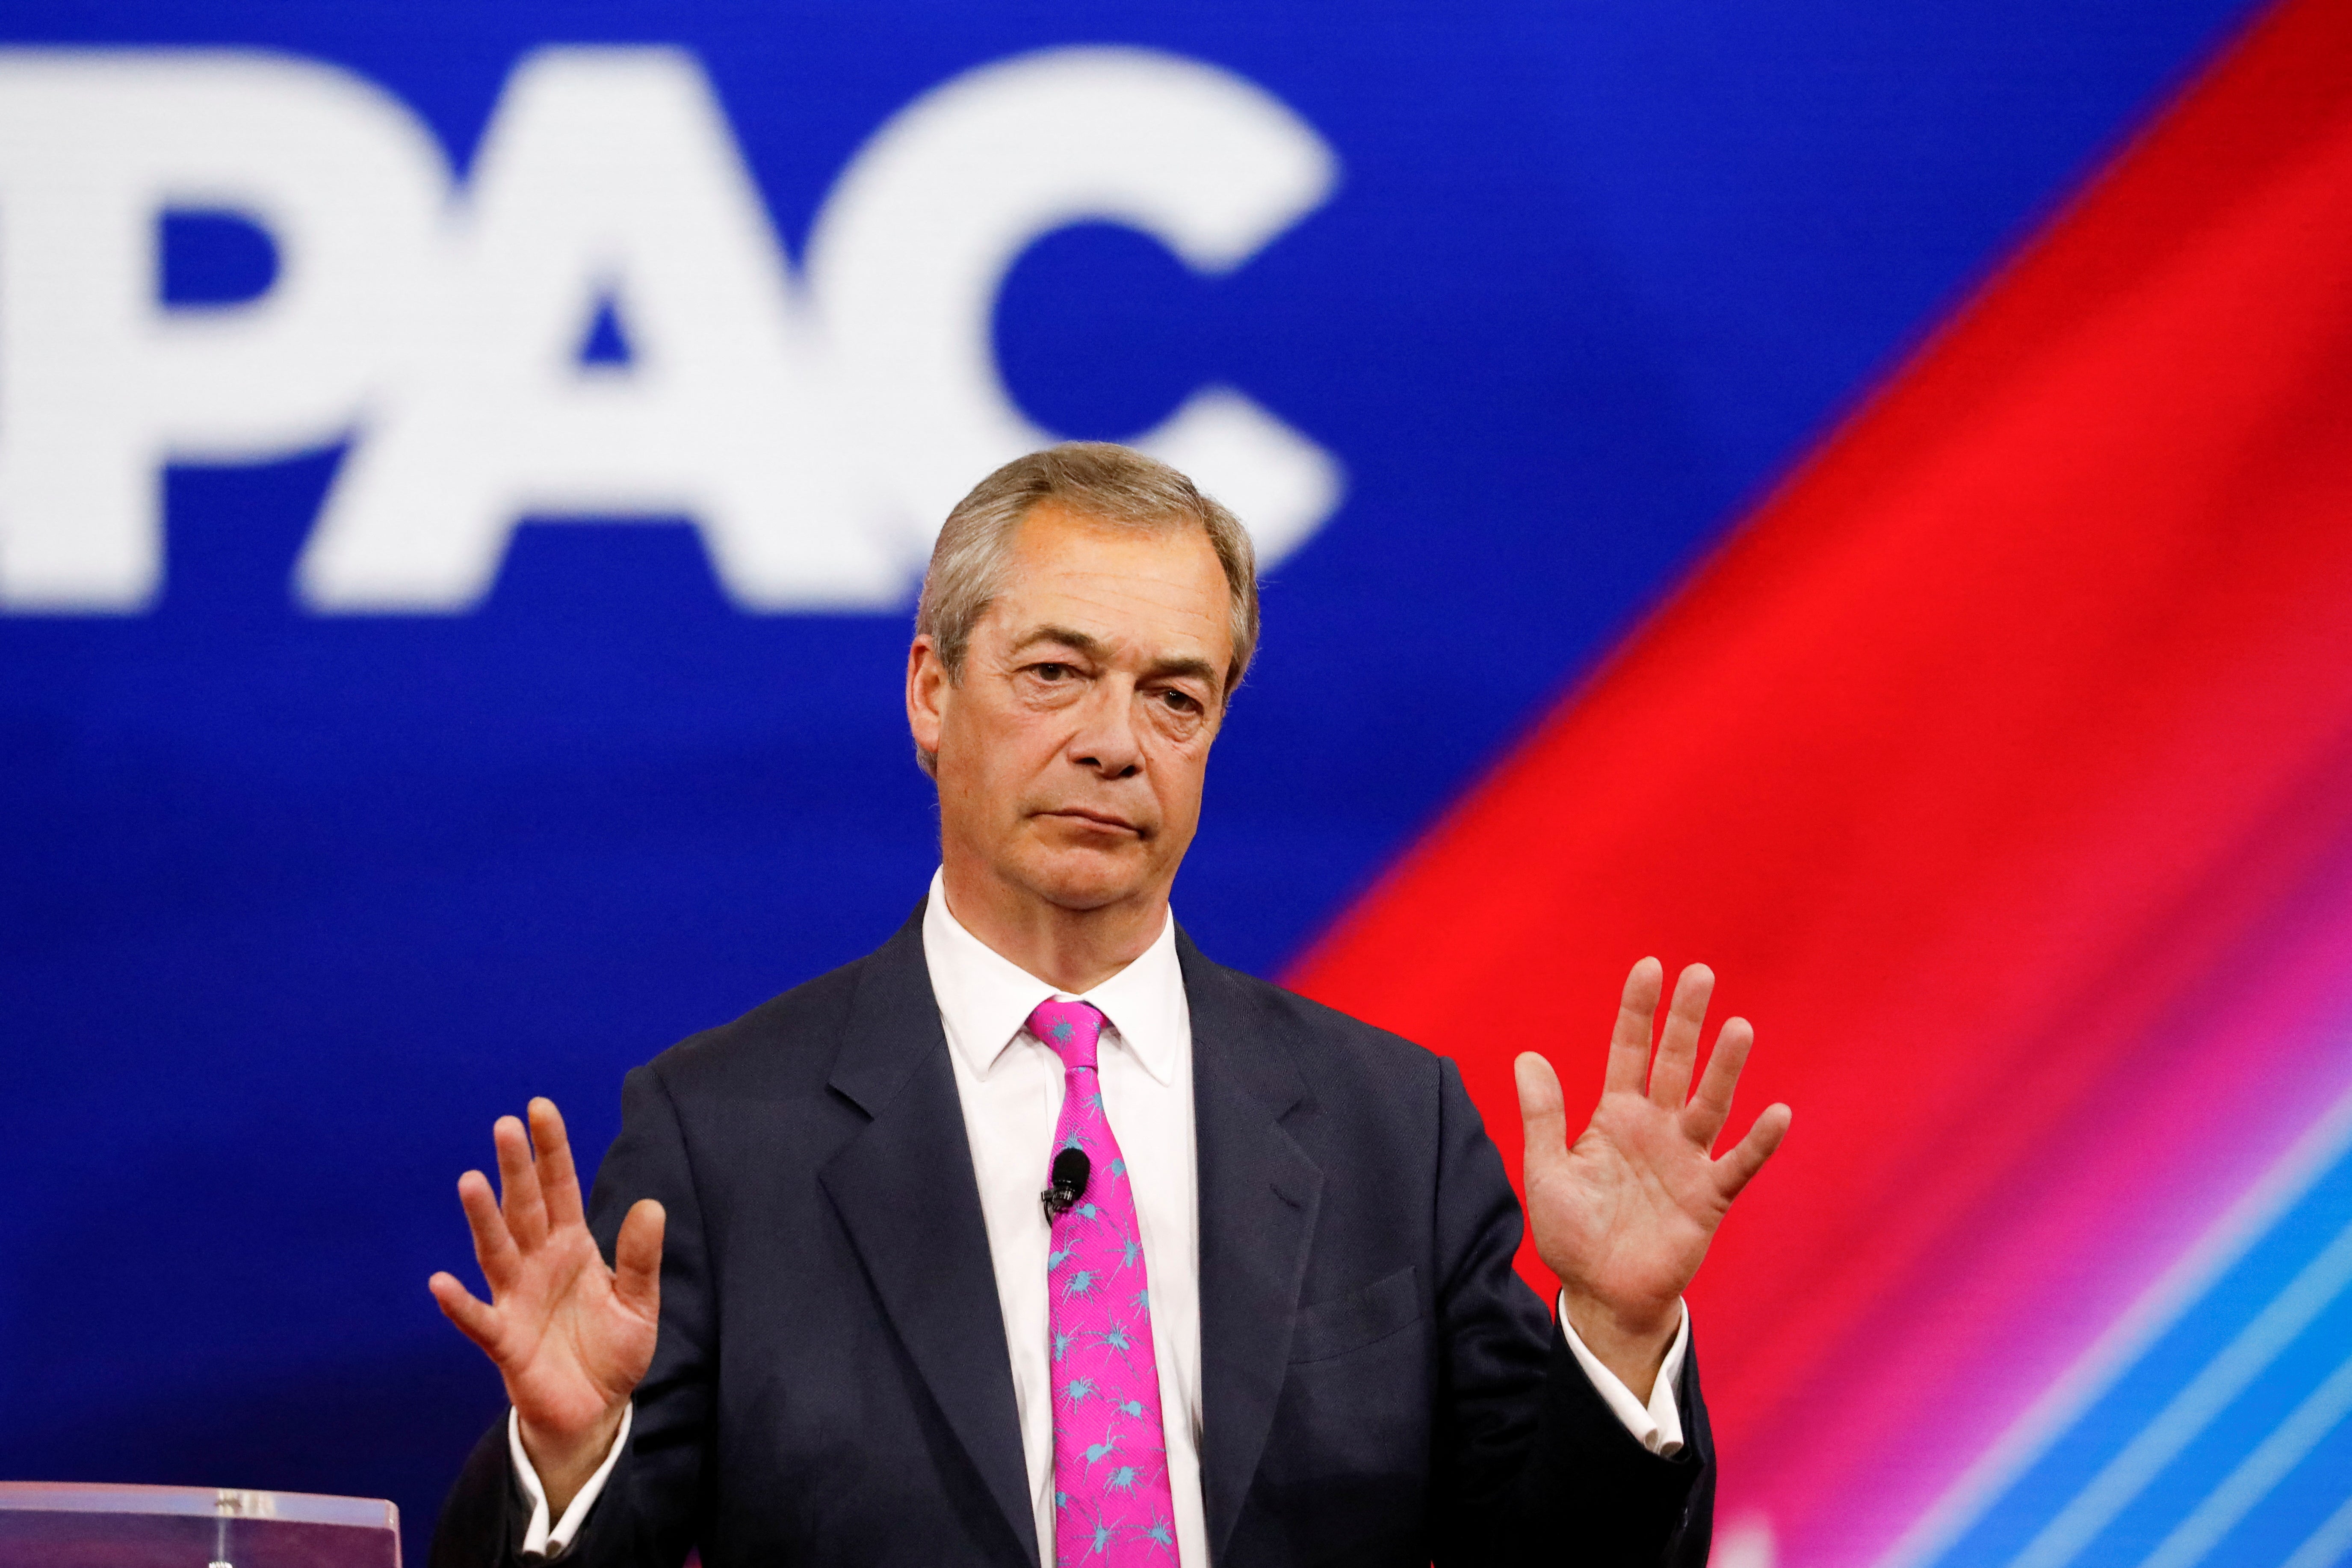 Former MEP Nigel Farage speaks at the Conservative Political Action Conference in Orlando